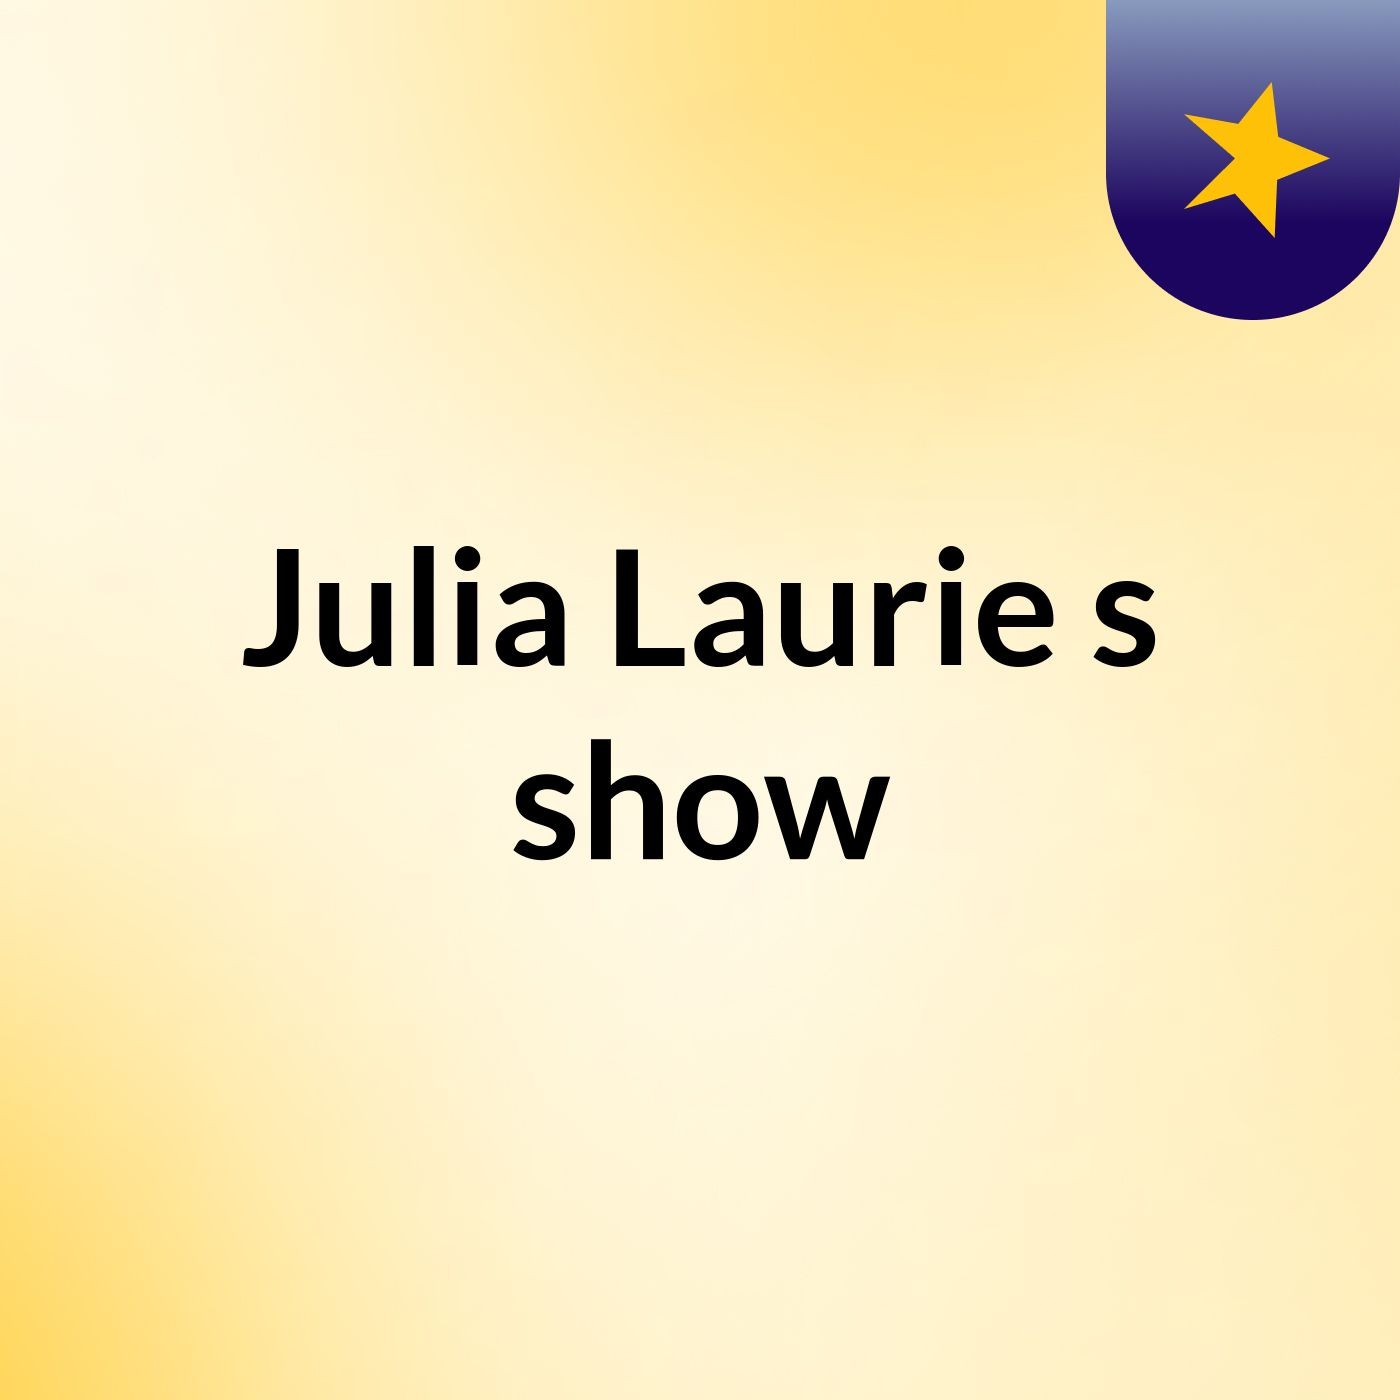 Julia Laurie's show